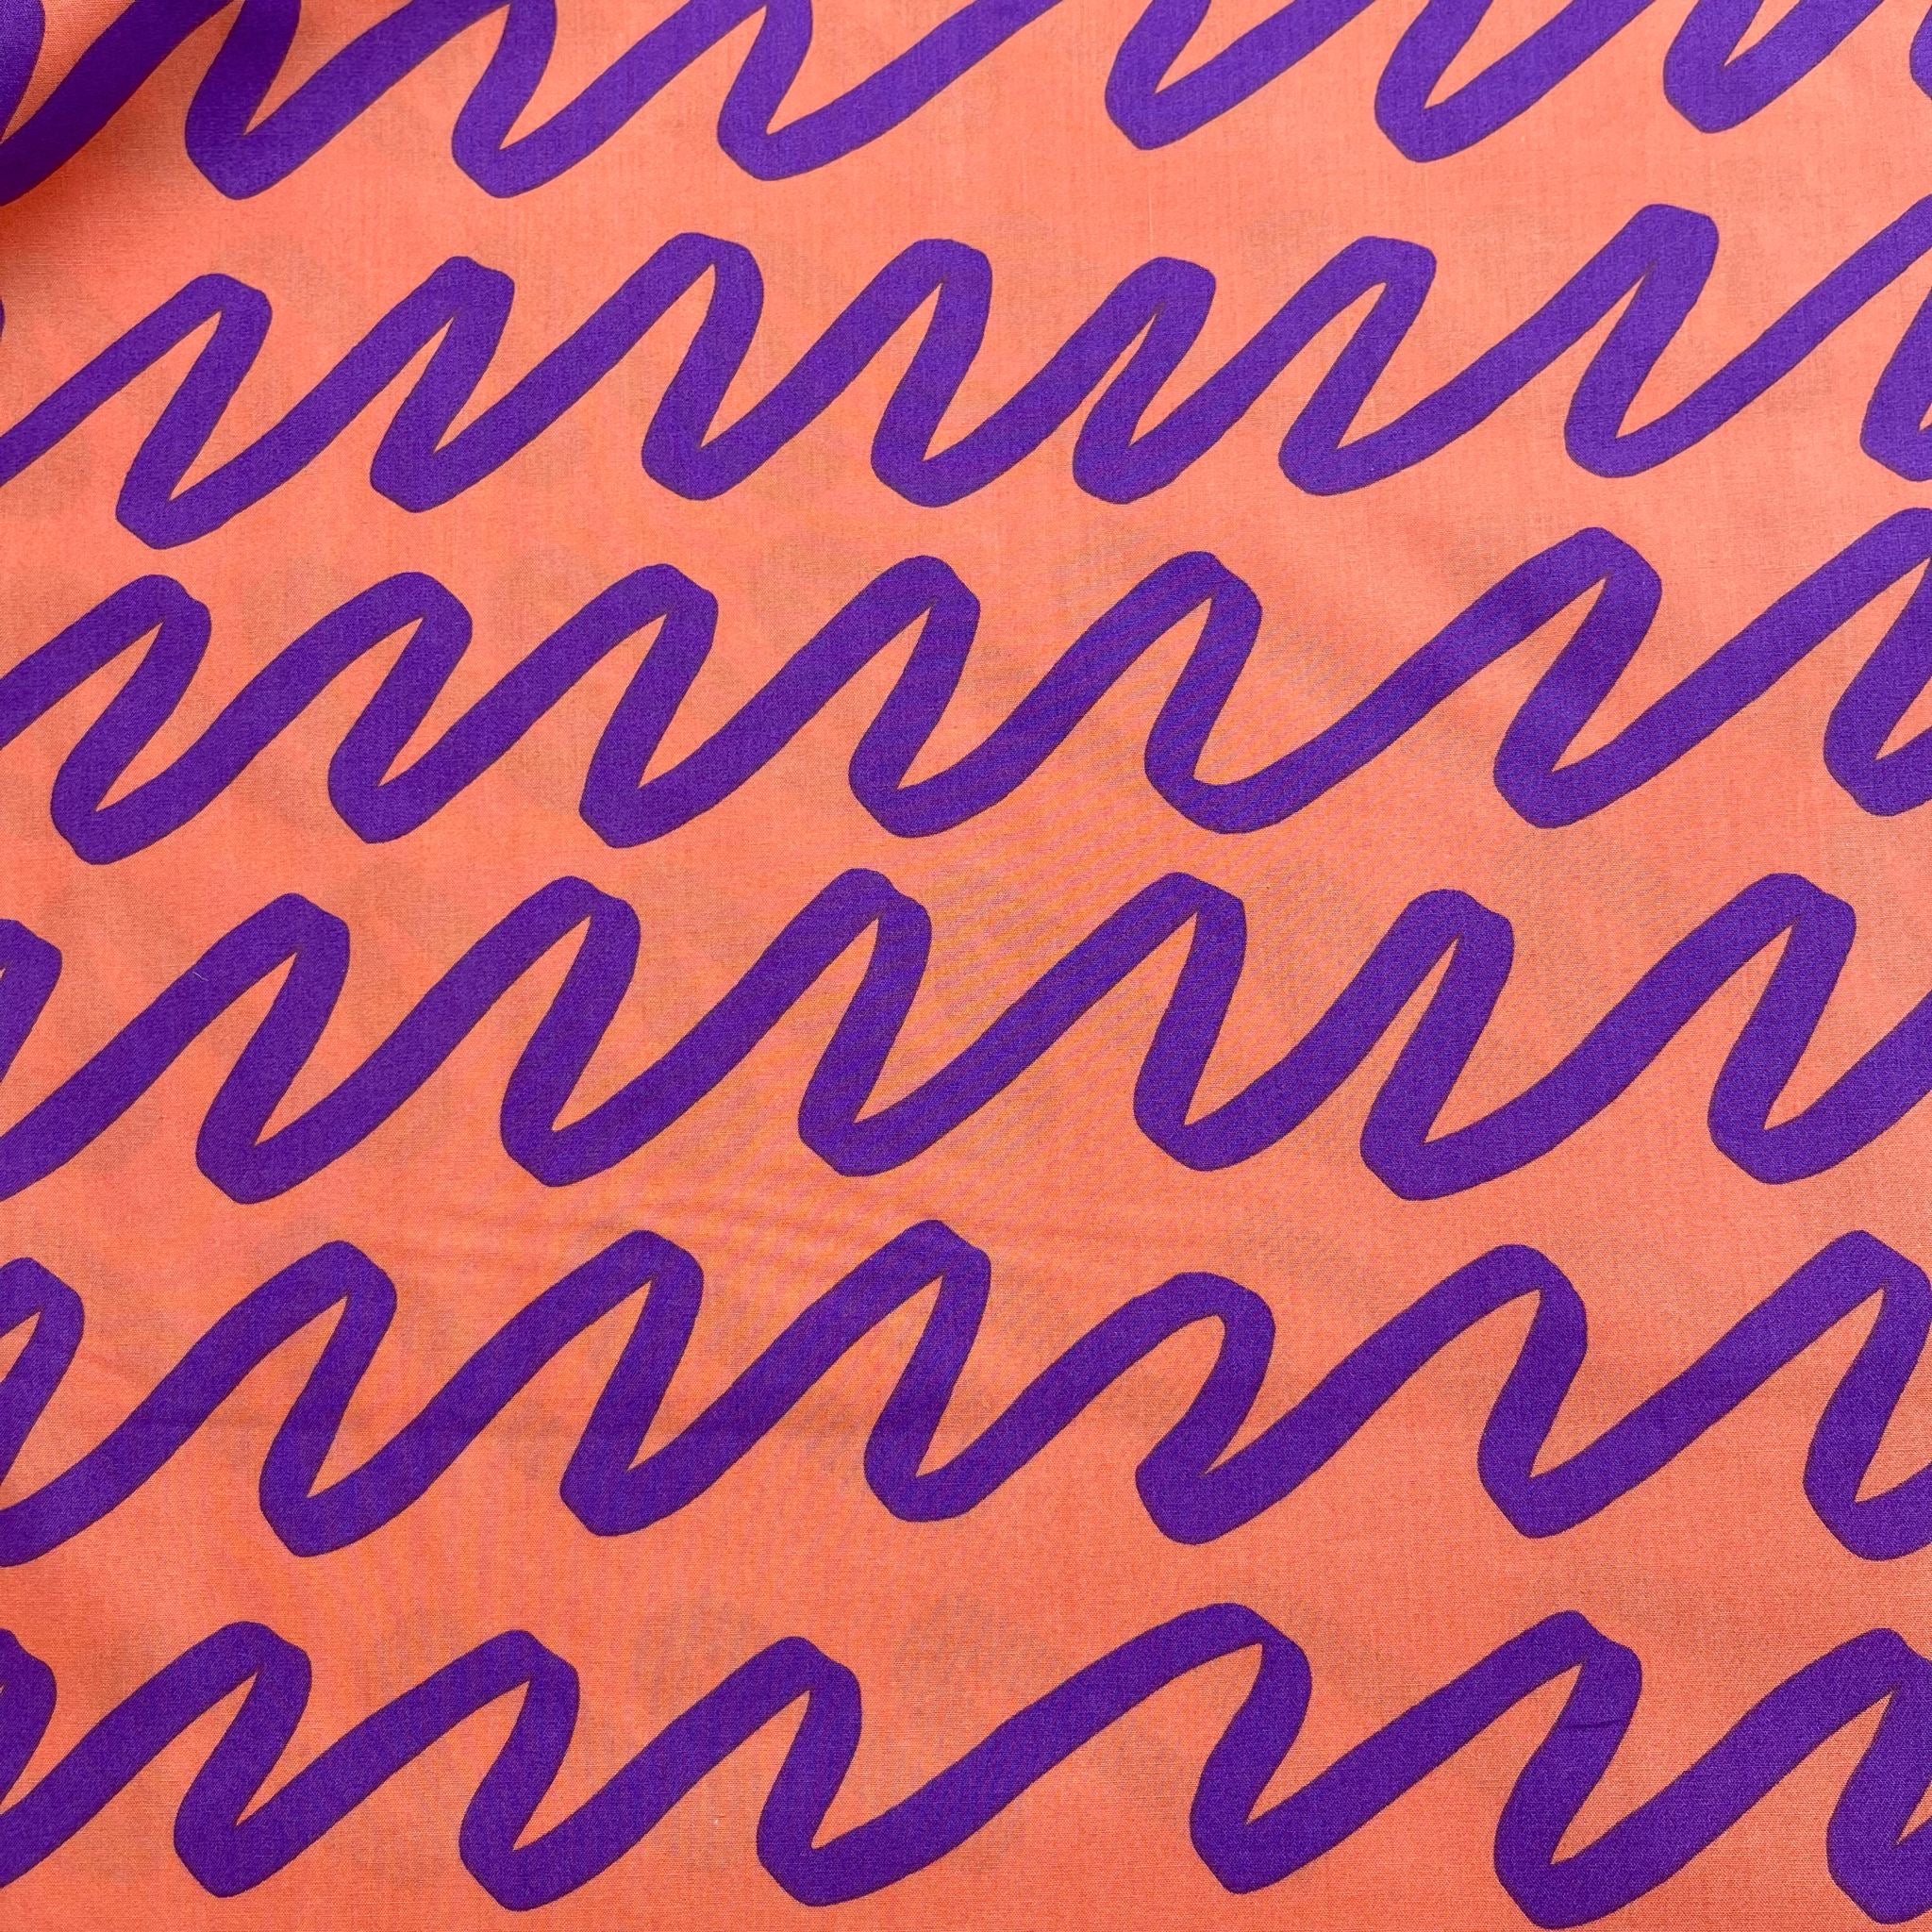 Nerida Hansen - Making Waves on Orange Cotton Poplin Fabric